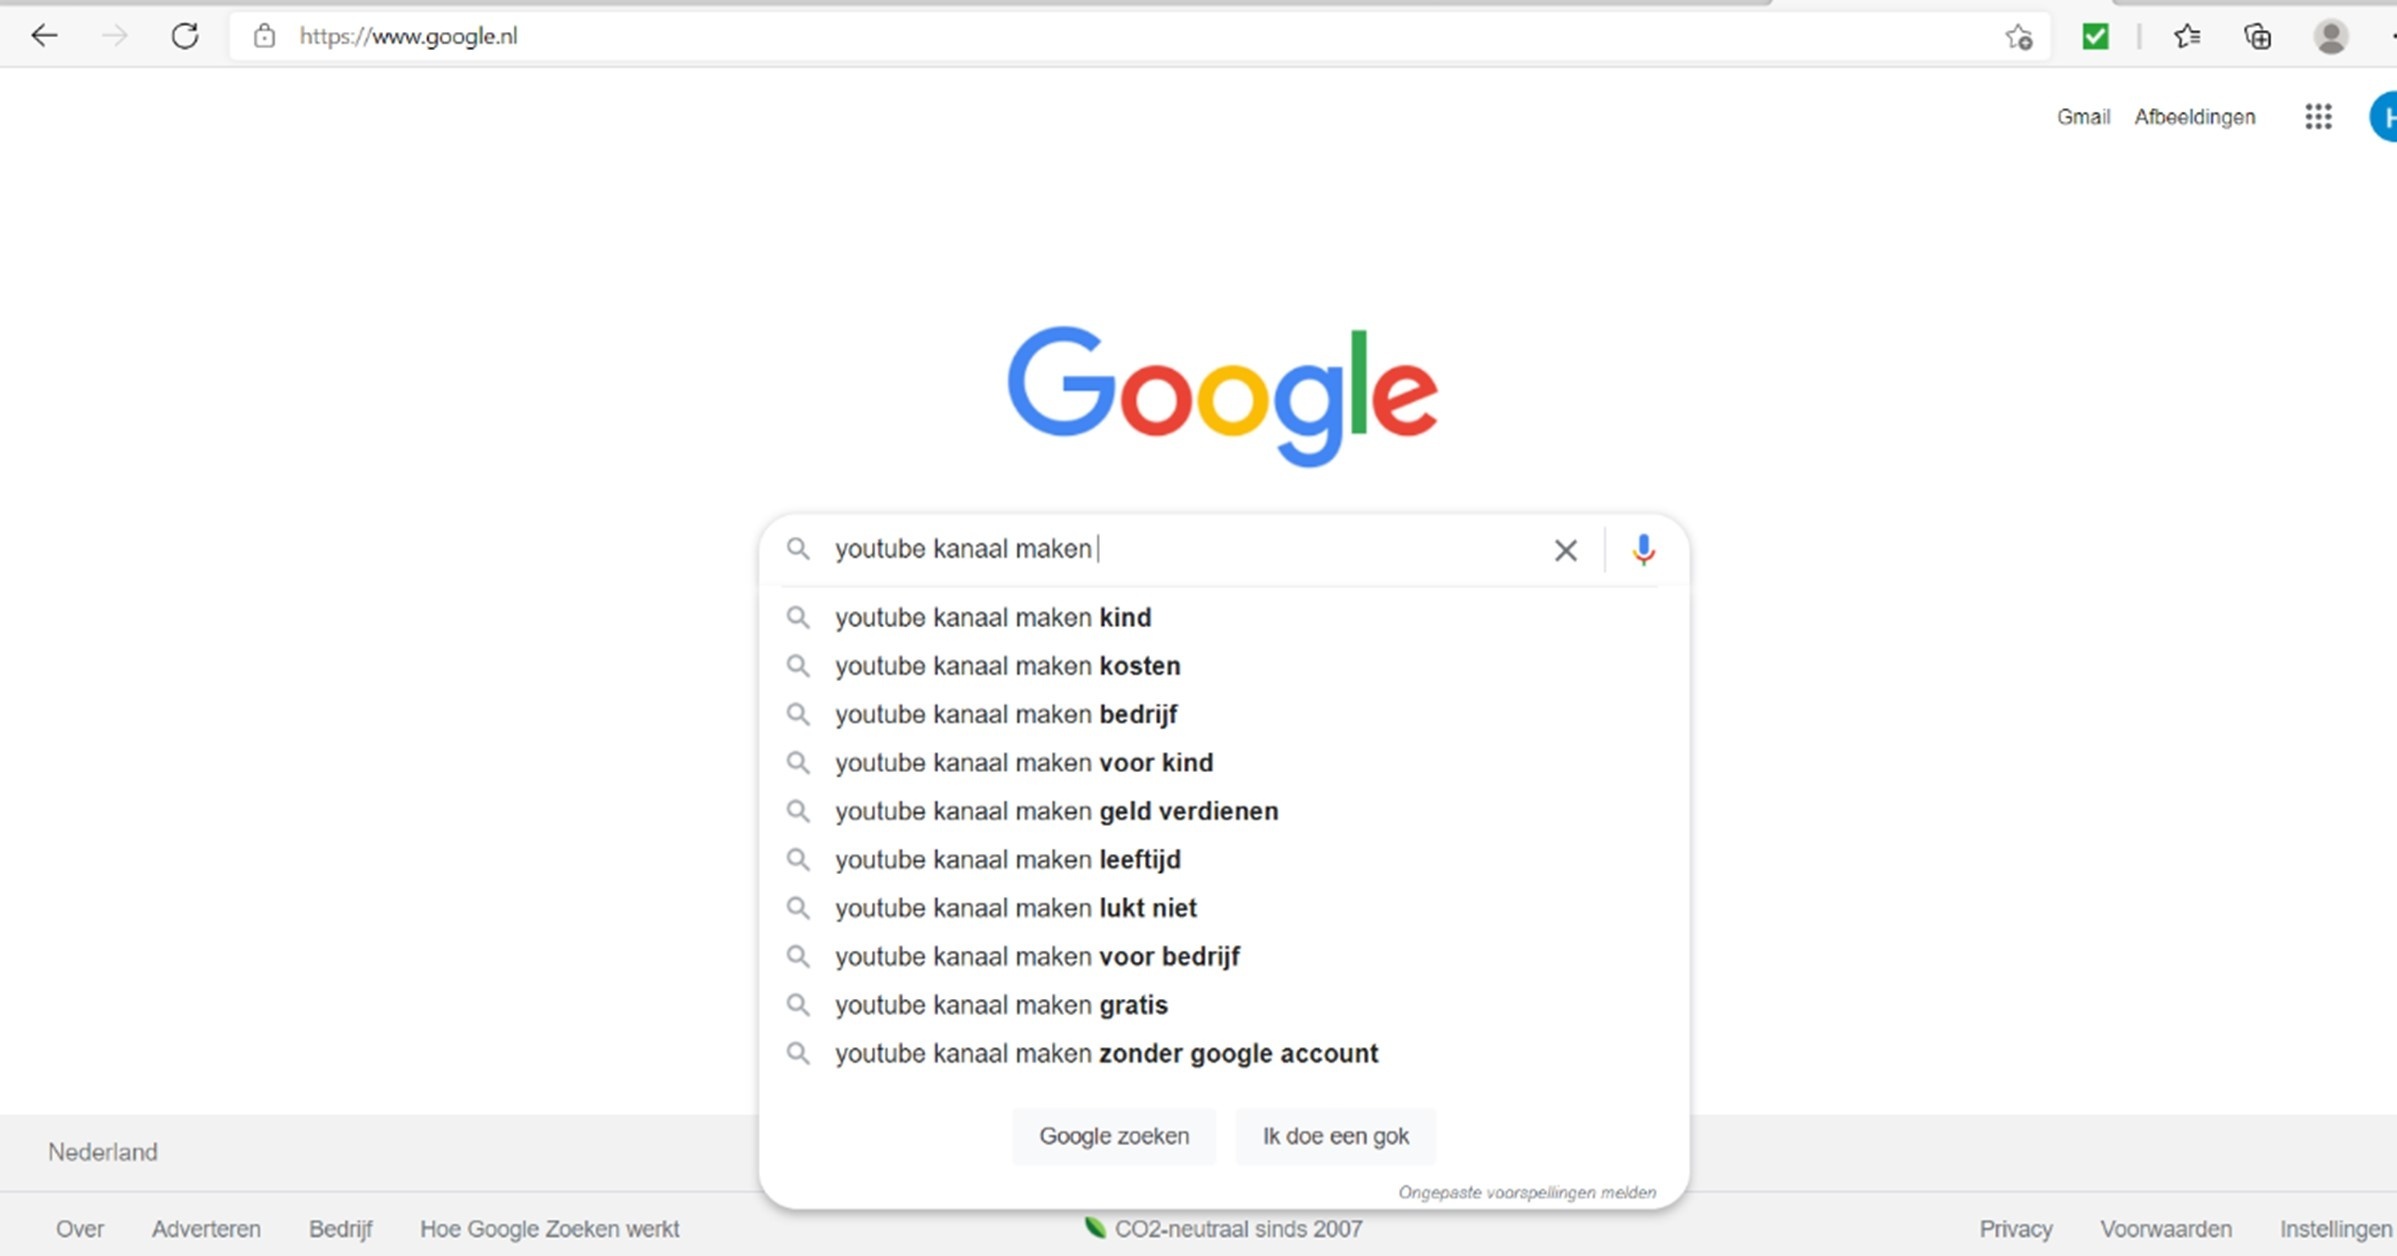 Zoekwoord suggesties van Google